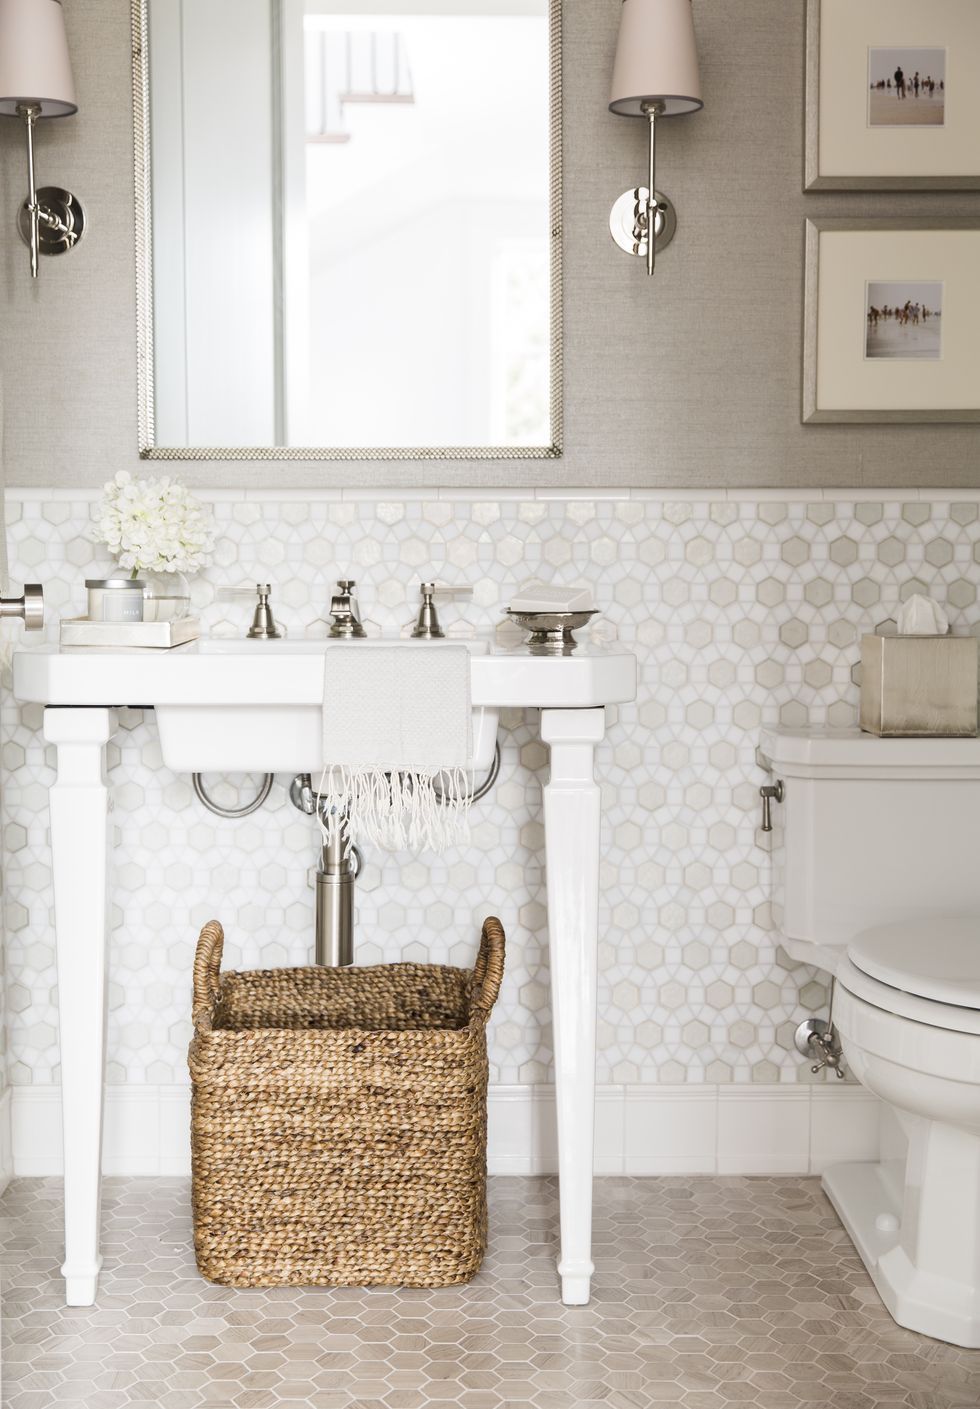 Creative Bathroom Tile Design Ideas Tiles For Floor Showers And Walls In Bathrooms,Mid Century Modern Dining Room Art